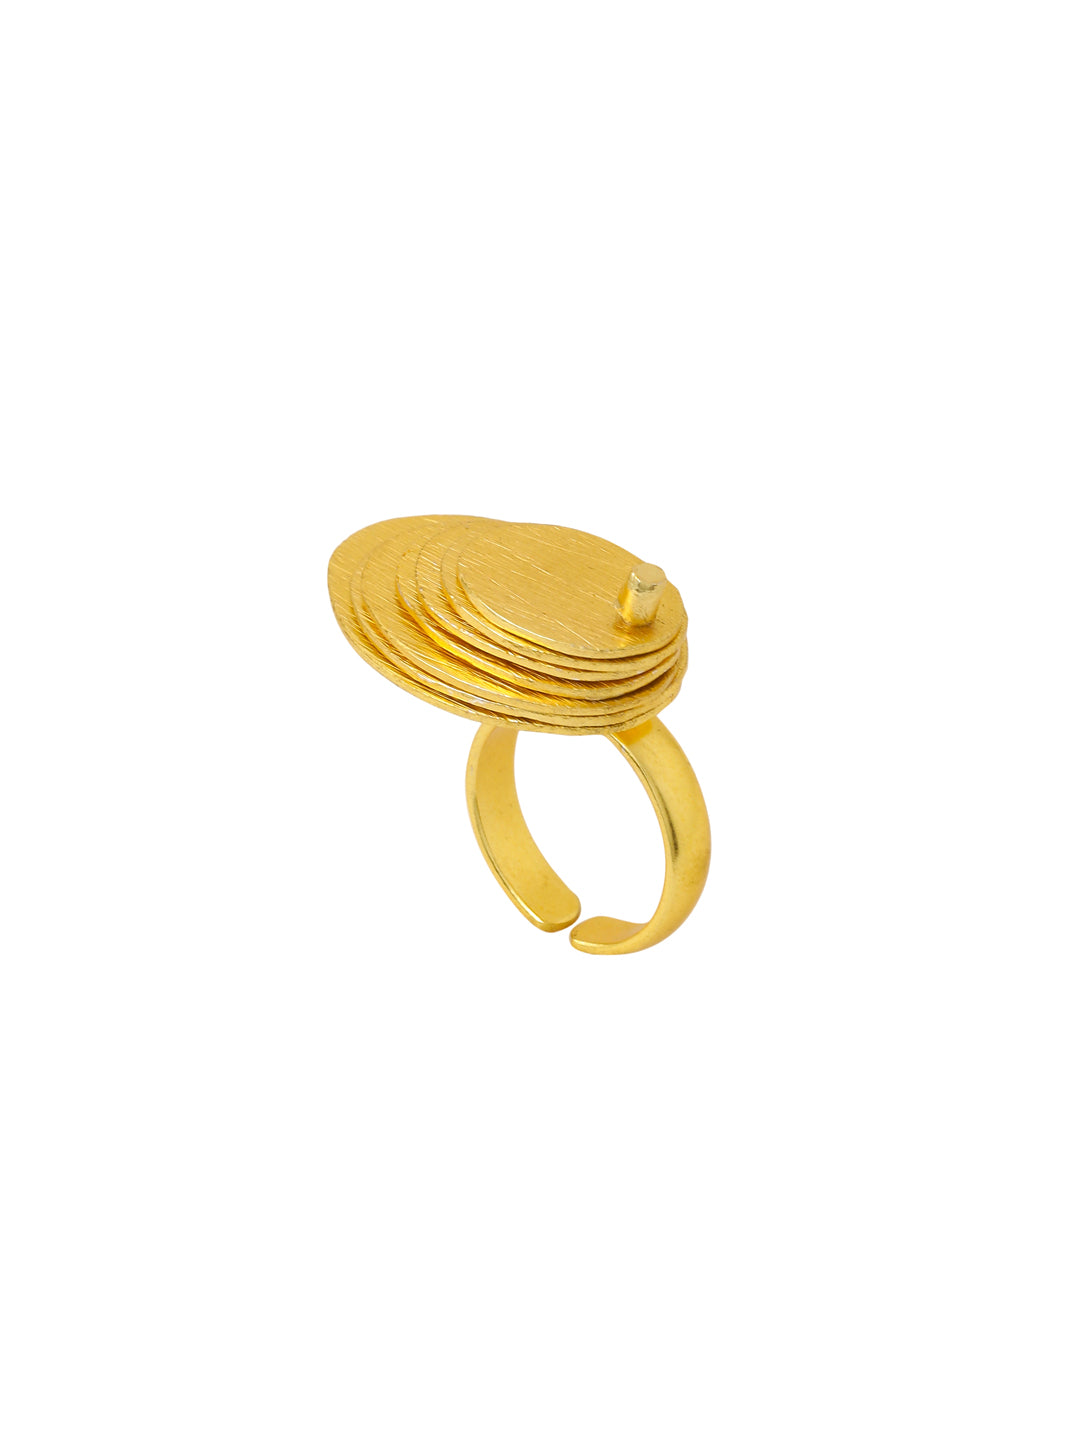 Women's Western Gold Plated Ajustable Finger Ring - NVR